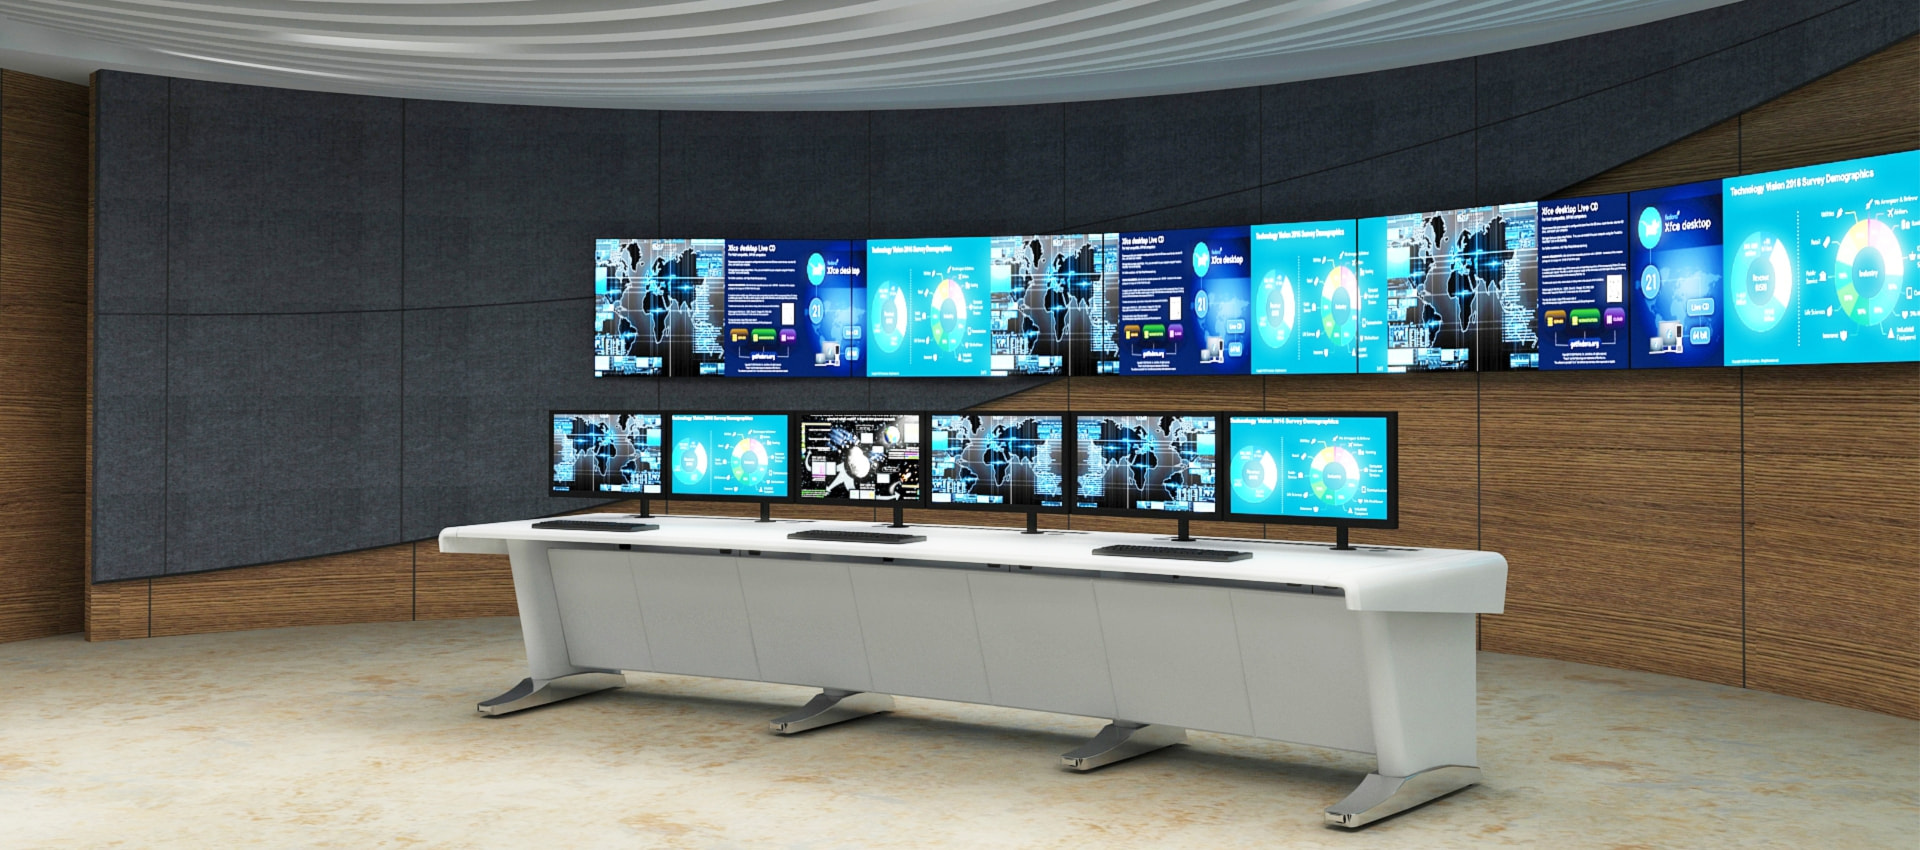 XTRON - Data center control room console